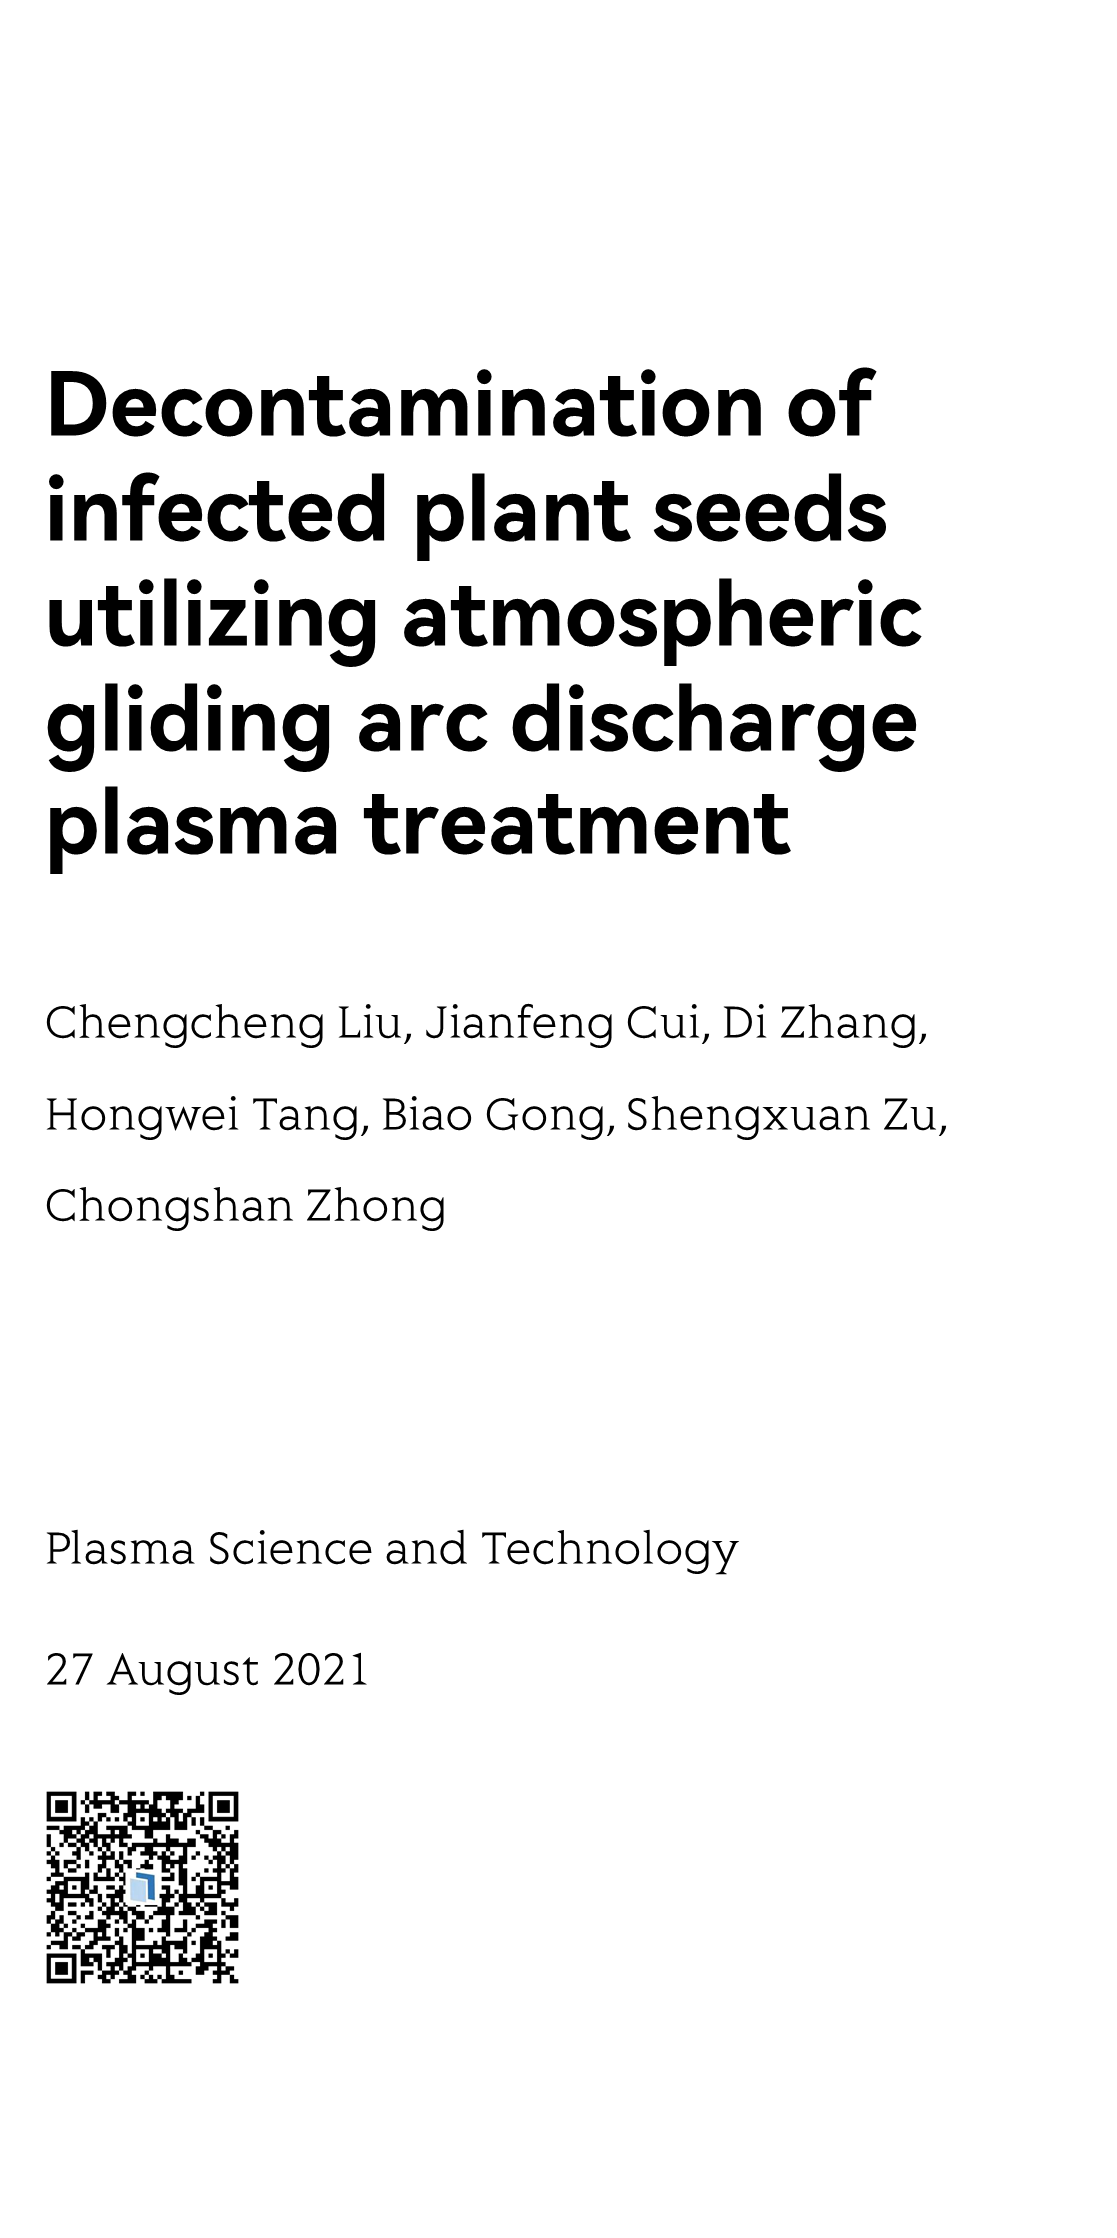 Decontamination of infected plant seeds utilizing atmospheric gliding arc discharge plasma treatment_1